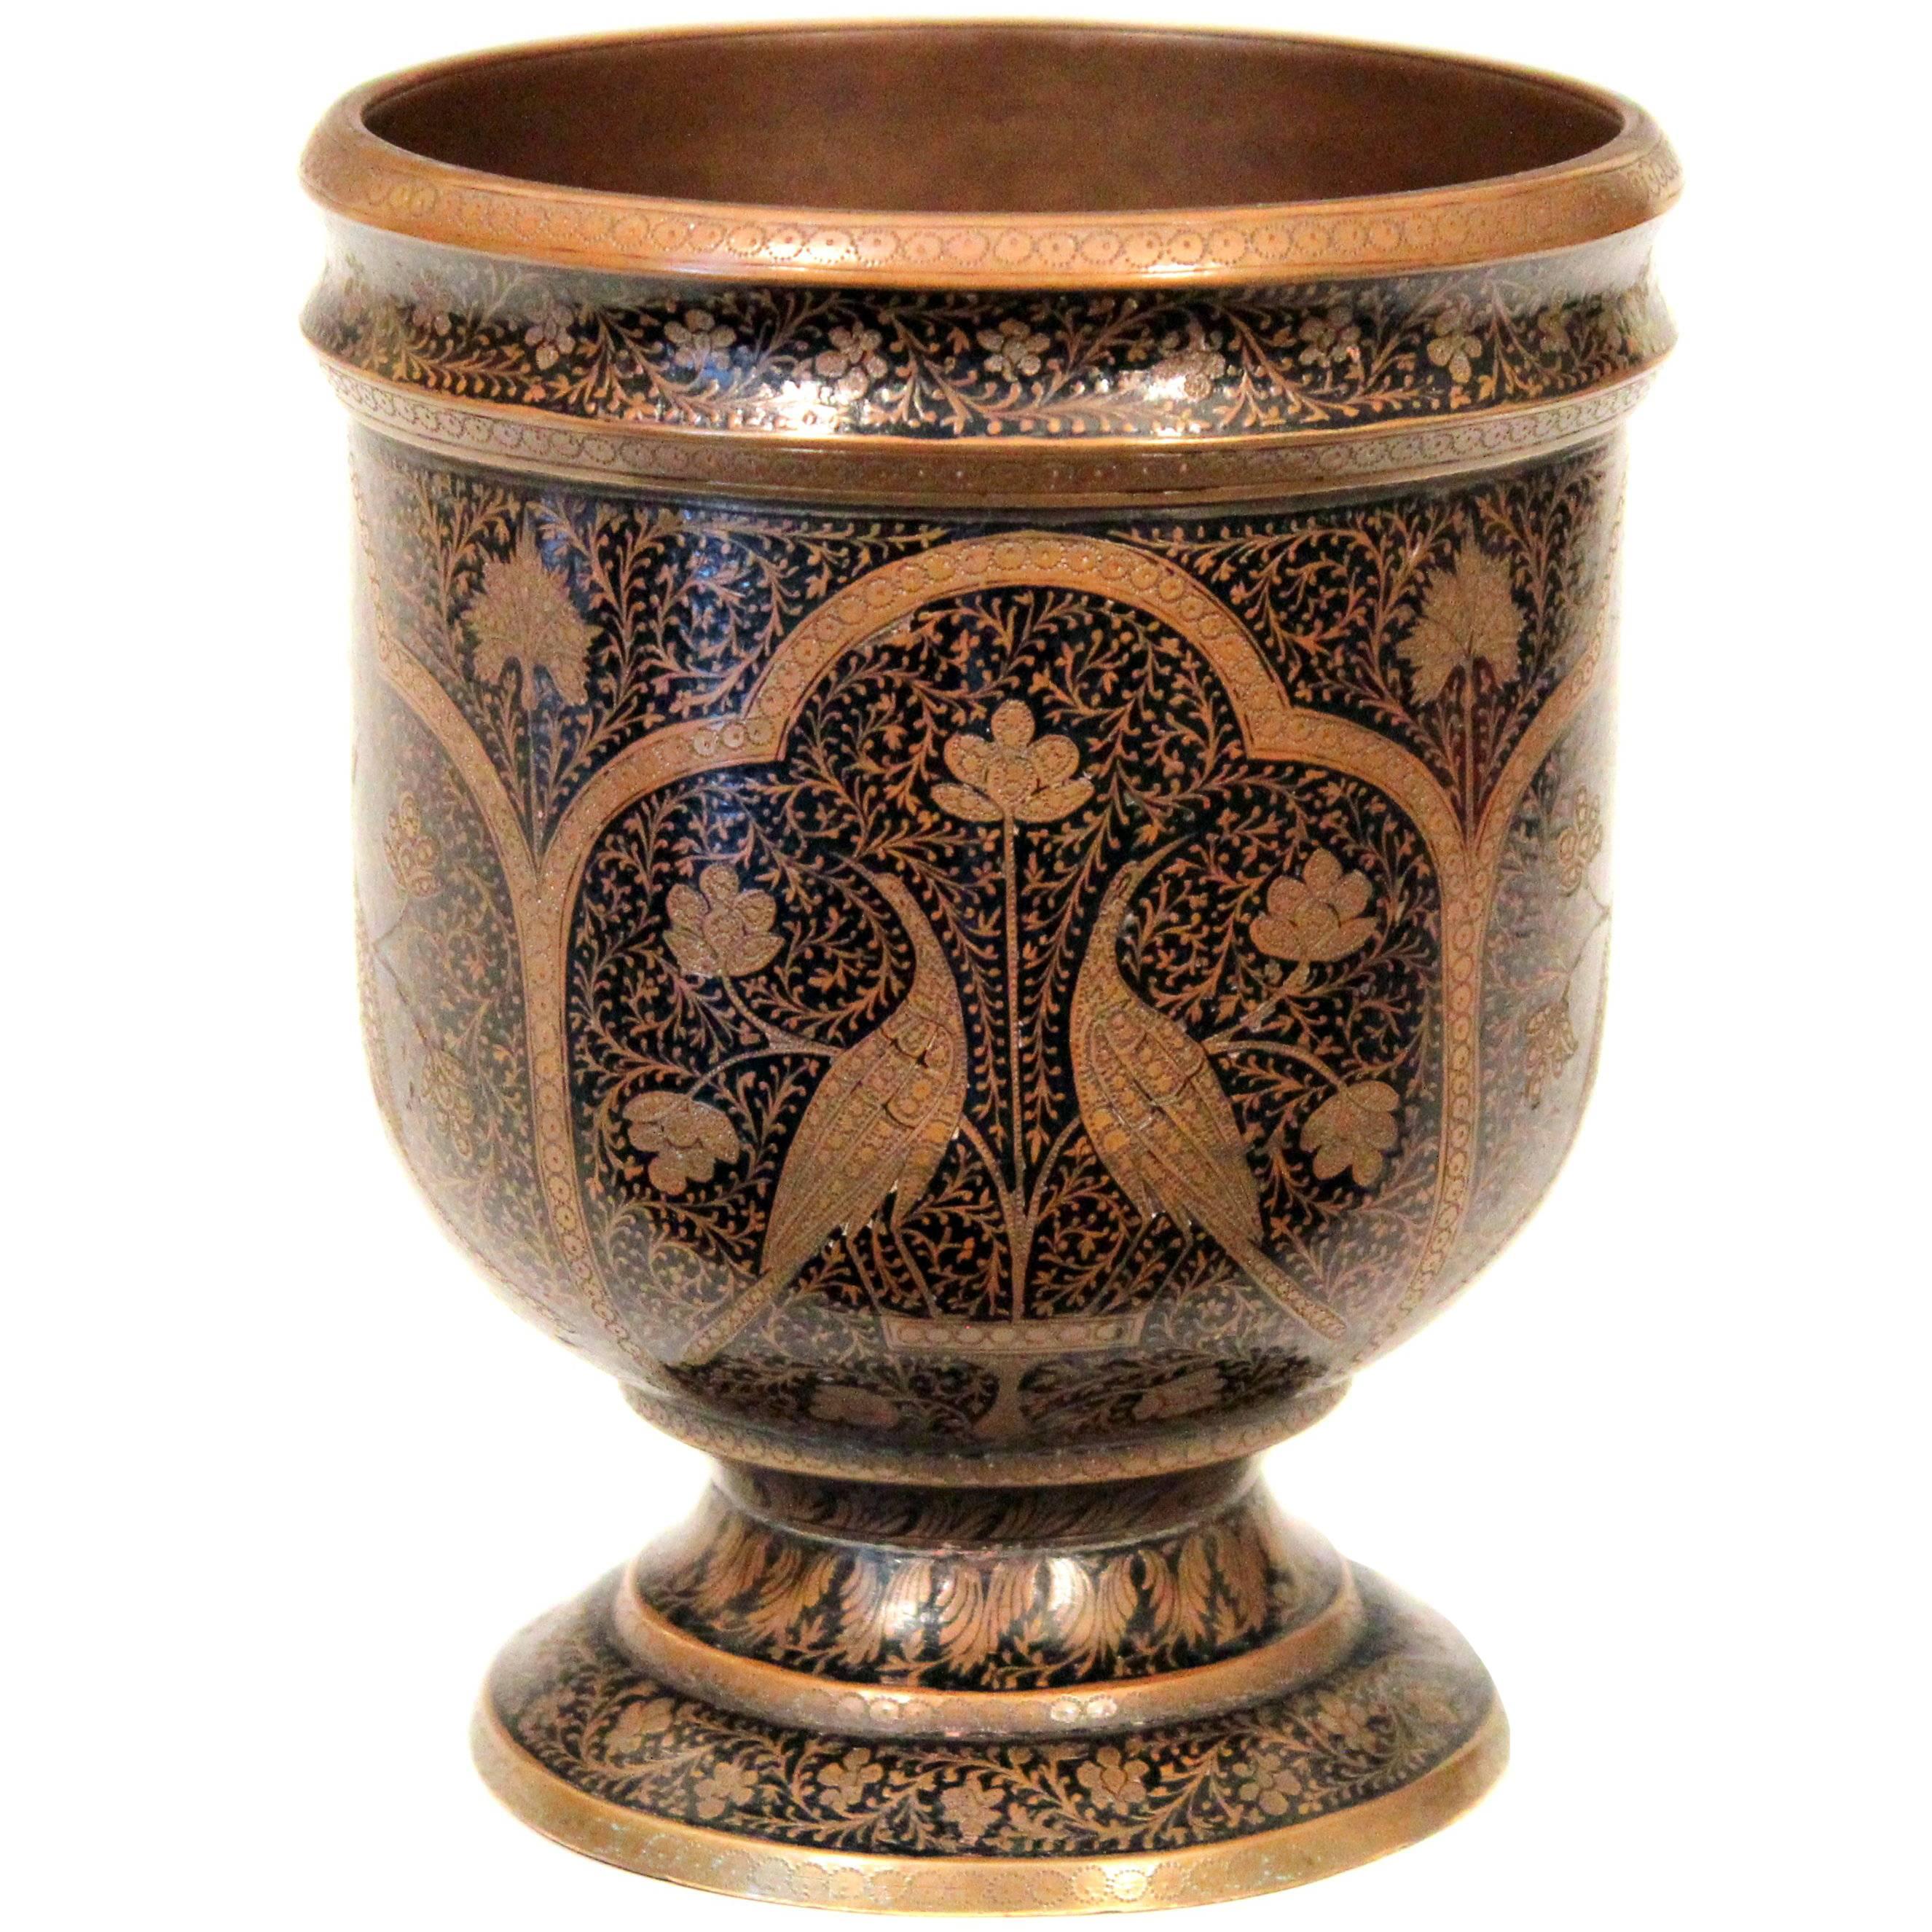 Antique Indian Mughal Kashmir Copper Inlaid Engraved Bidri Cup Vase